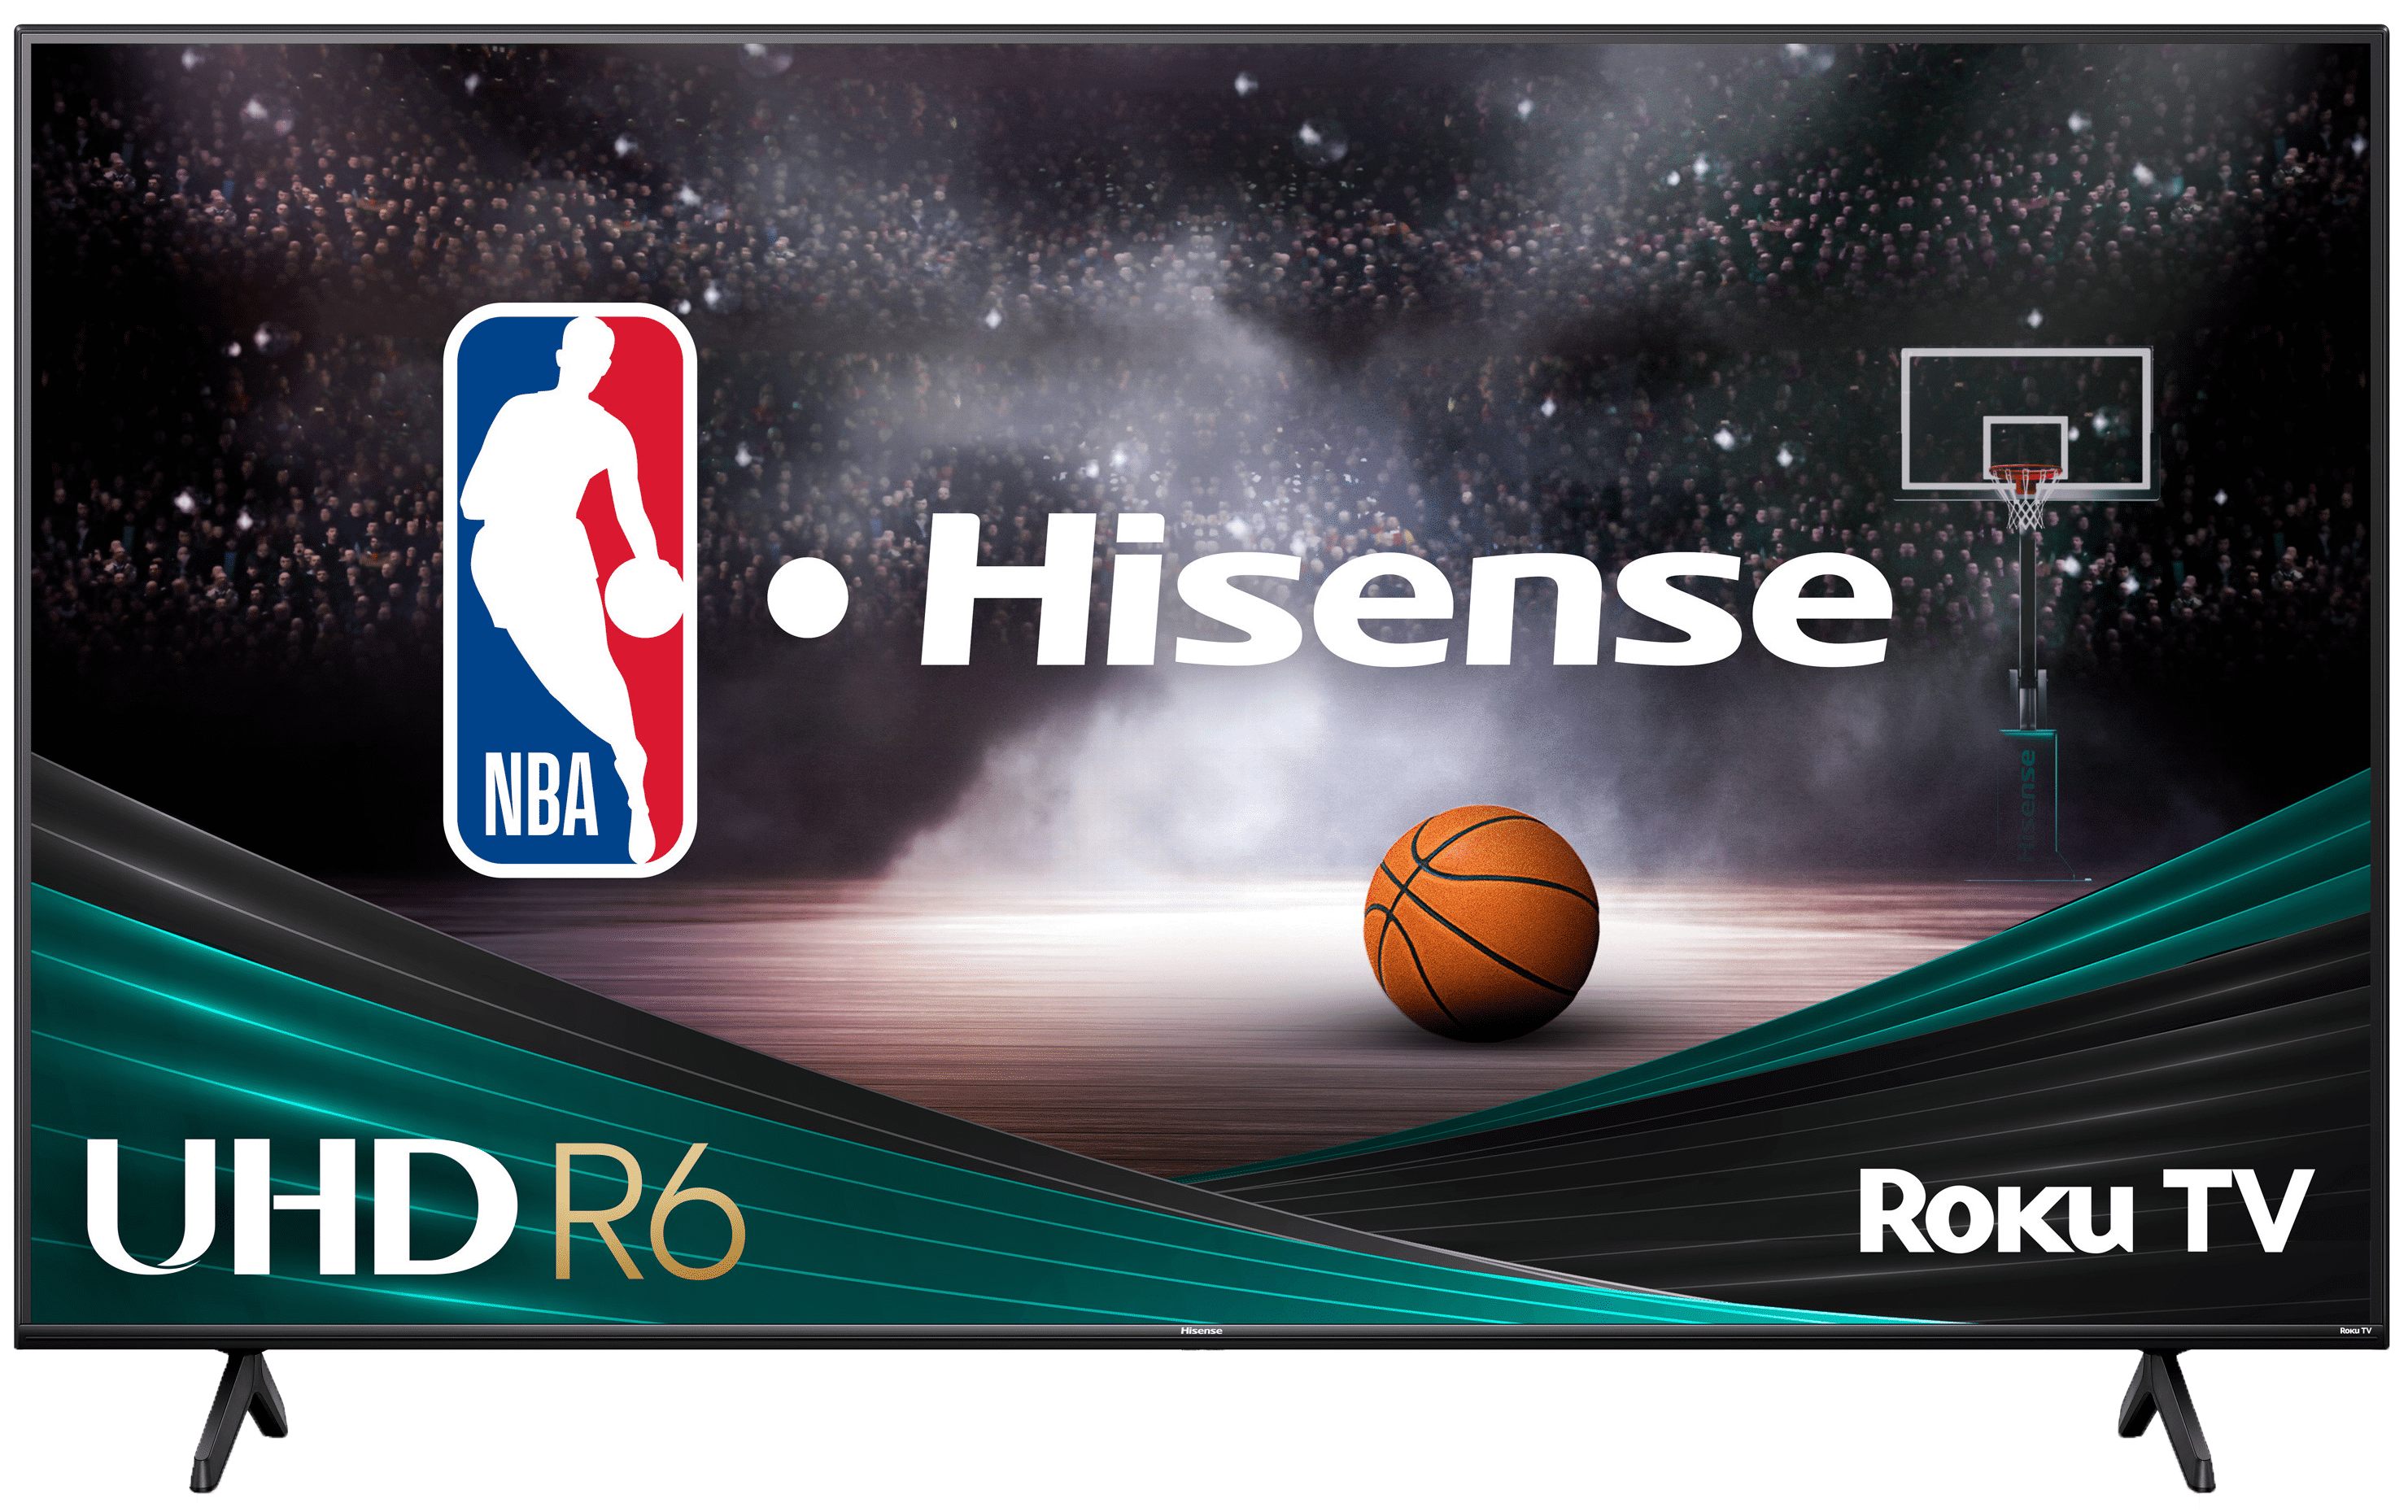 Hisense 58" Class 4K UHD LED LCD Roku Smart TV HDR R6 Series 58R6E3 - Walmart.com 268.00